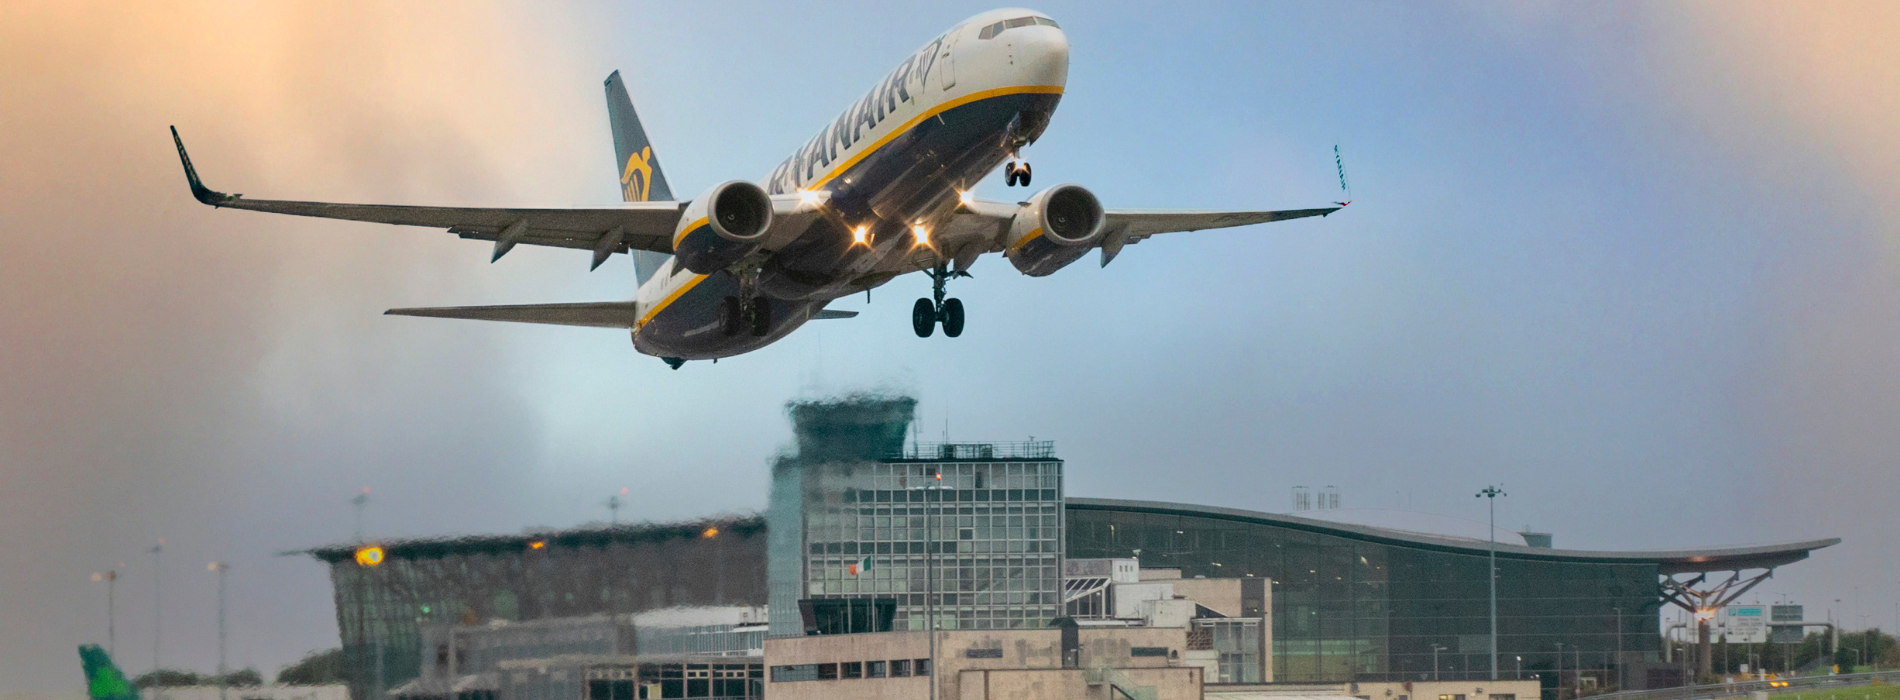 Ryanair Flight in takeoff